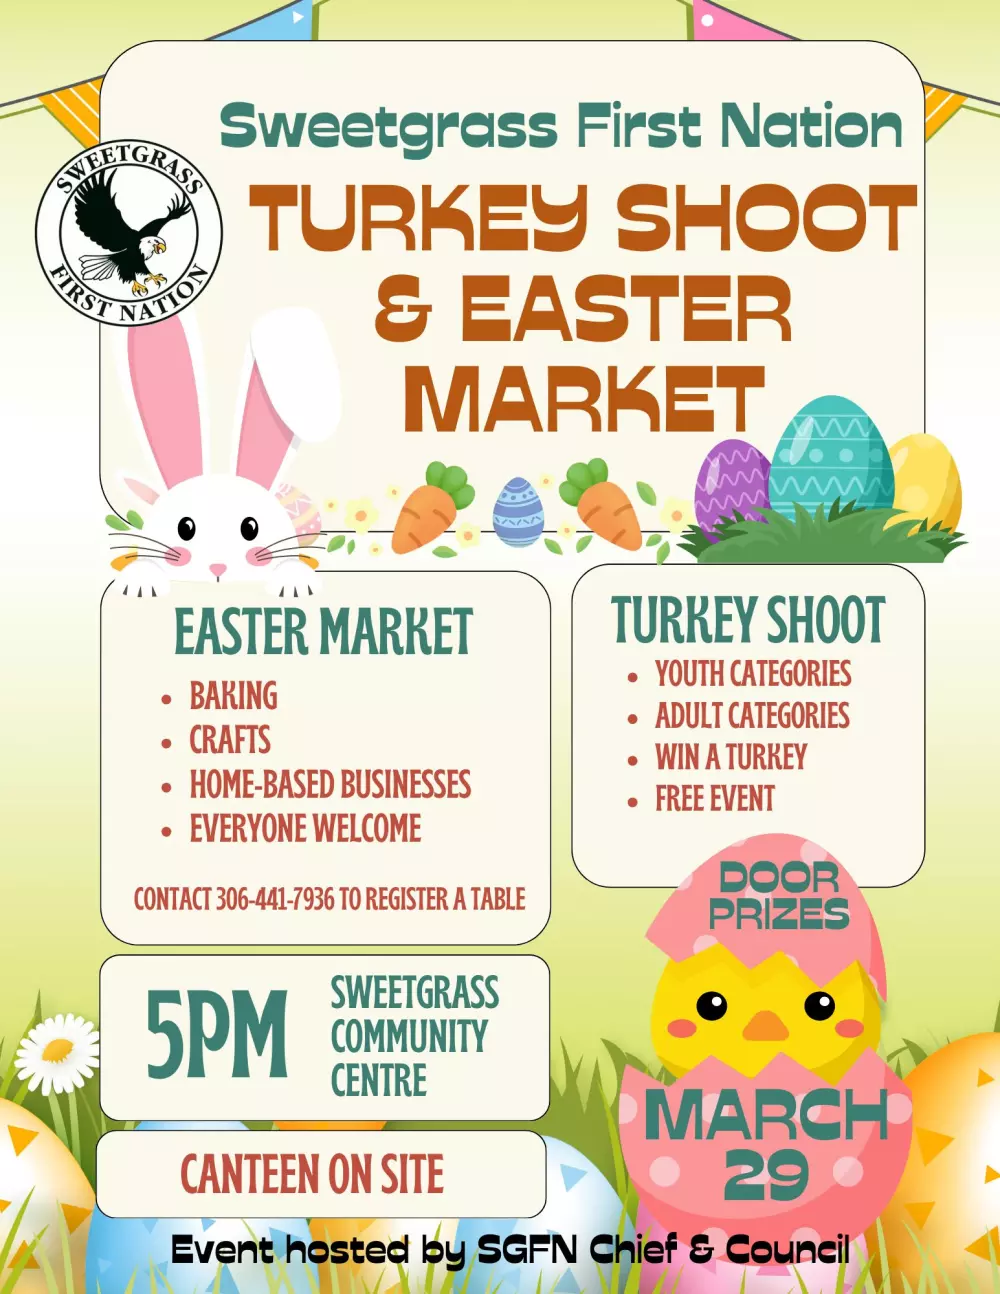 Sweetgrass Turkey Shoot & Easter Market